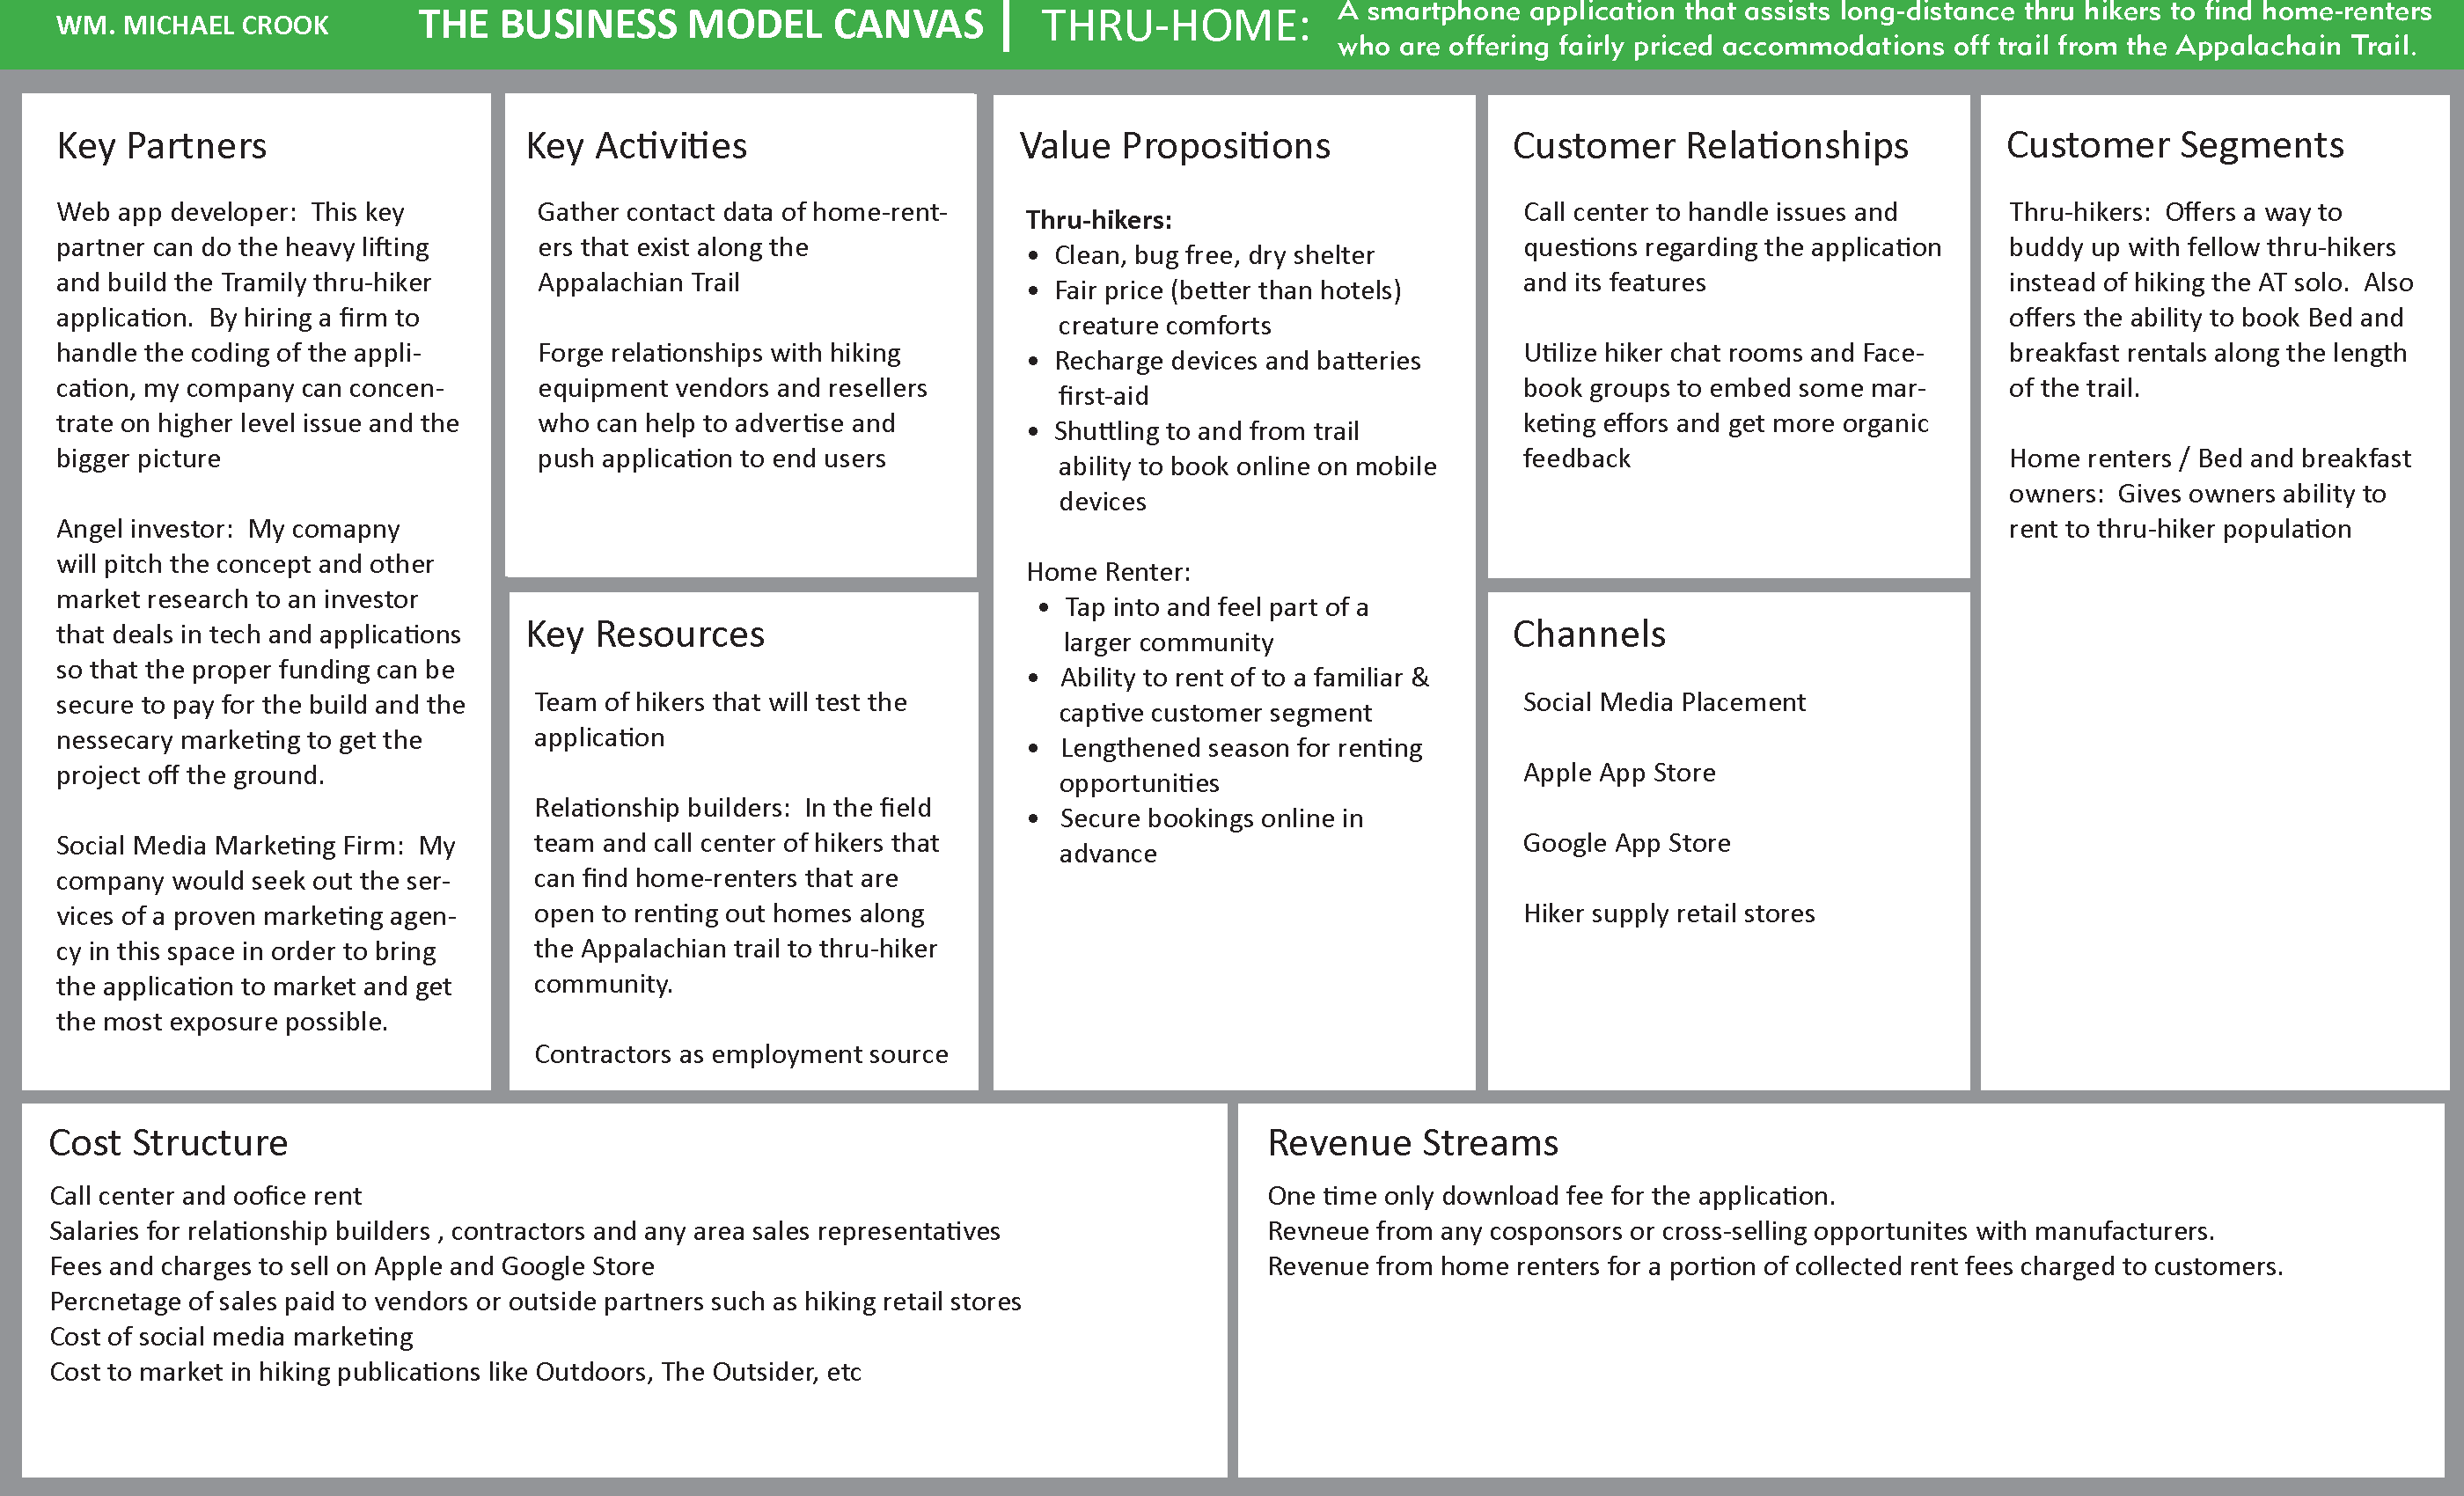 Business_Canvas_Model